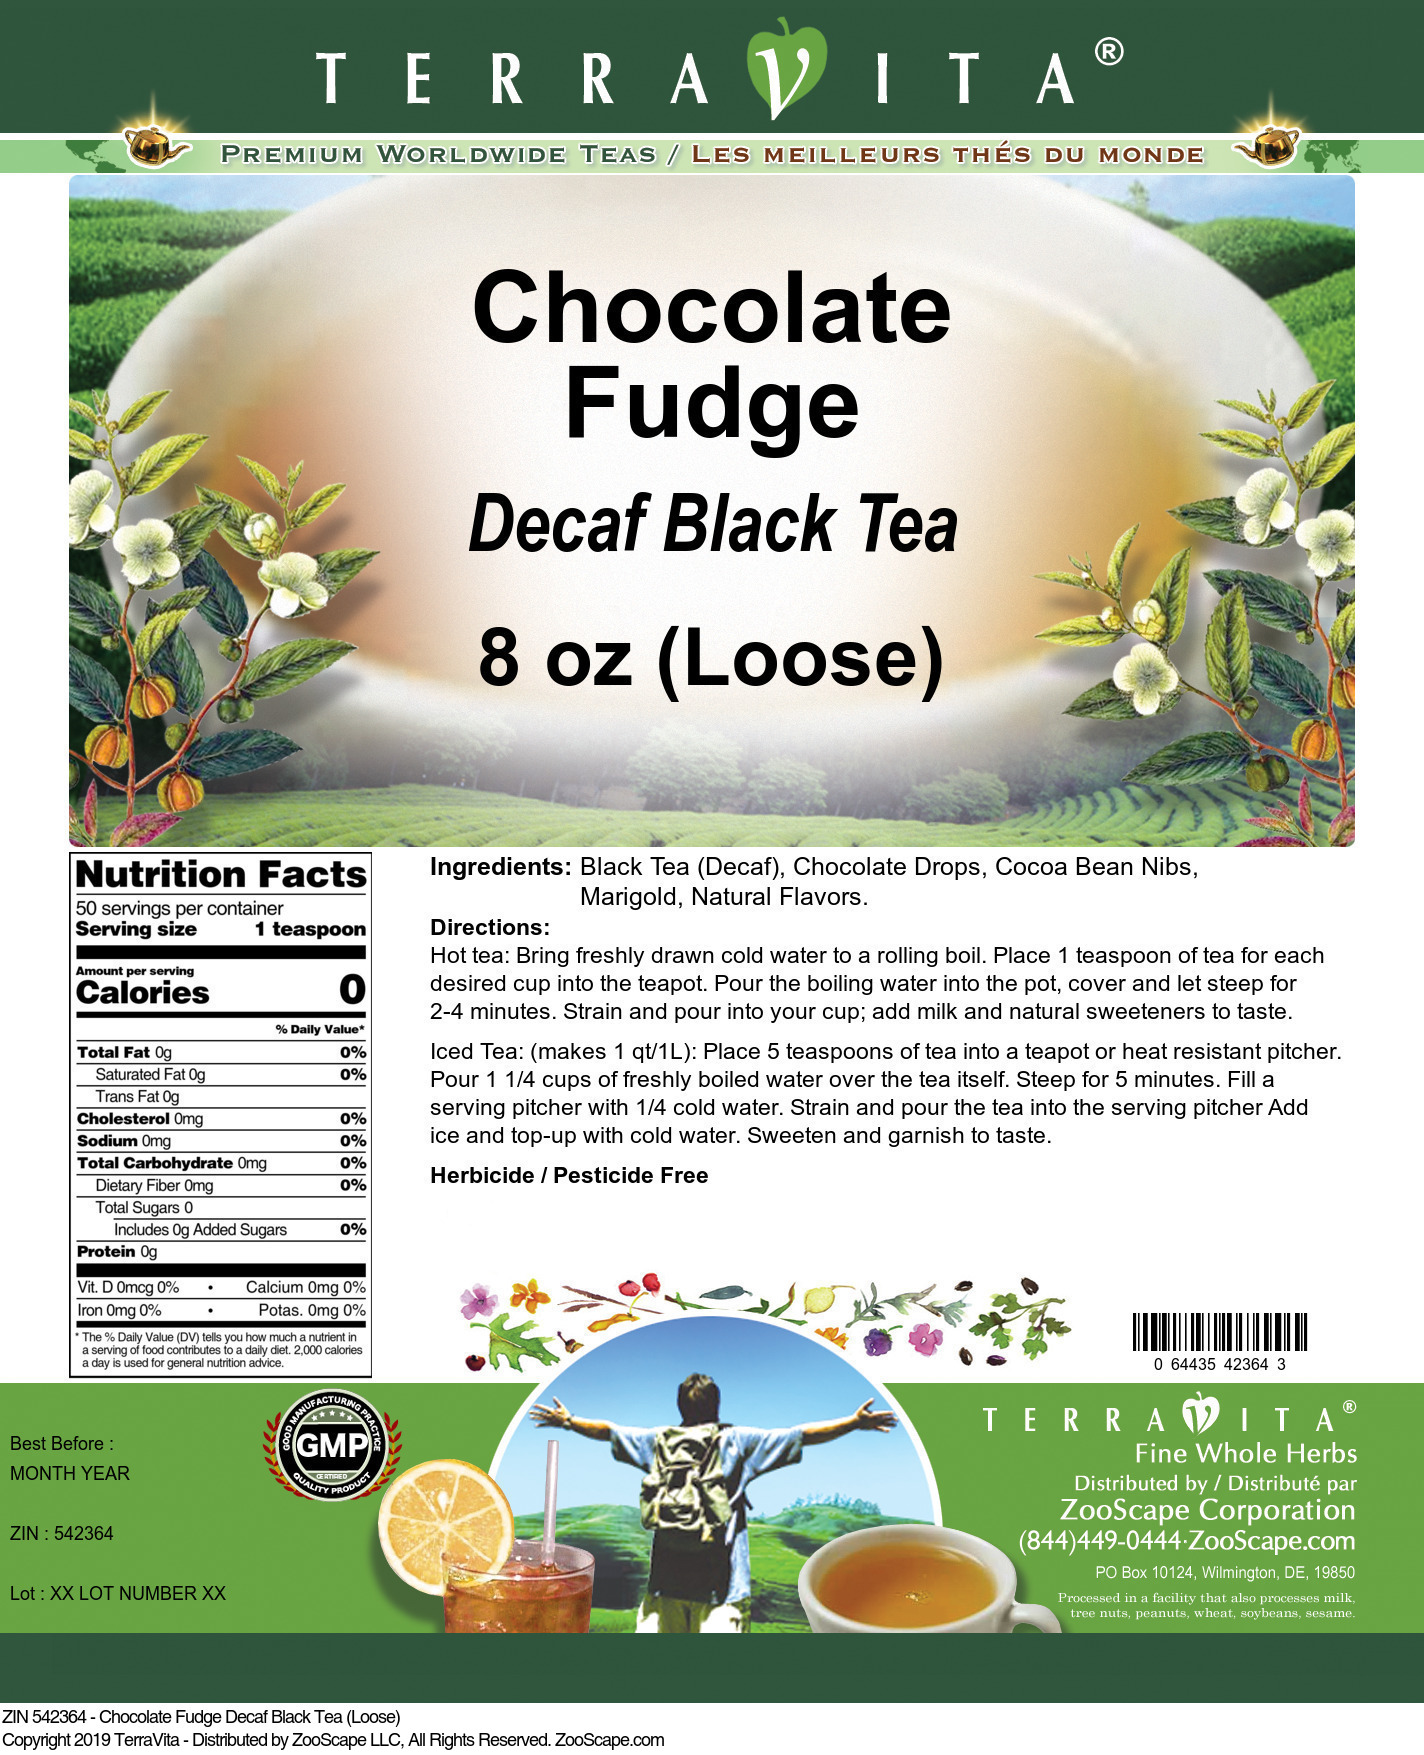 Chocolate Fudge Decaf Black Tea (Loose) - Label